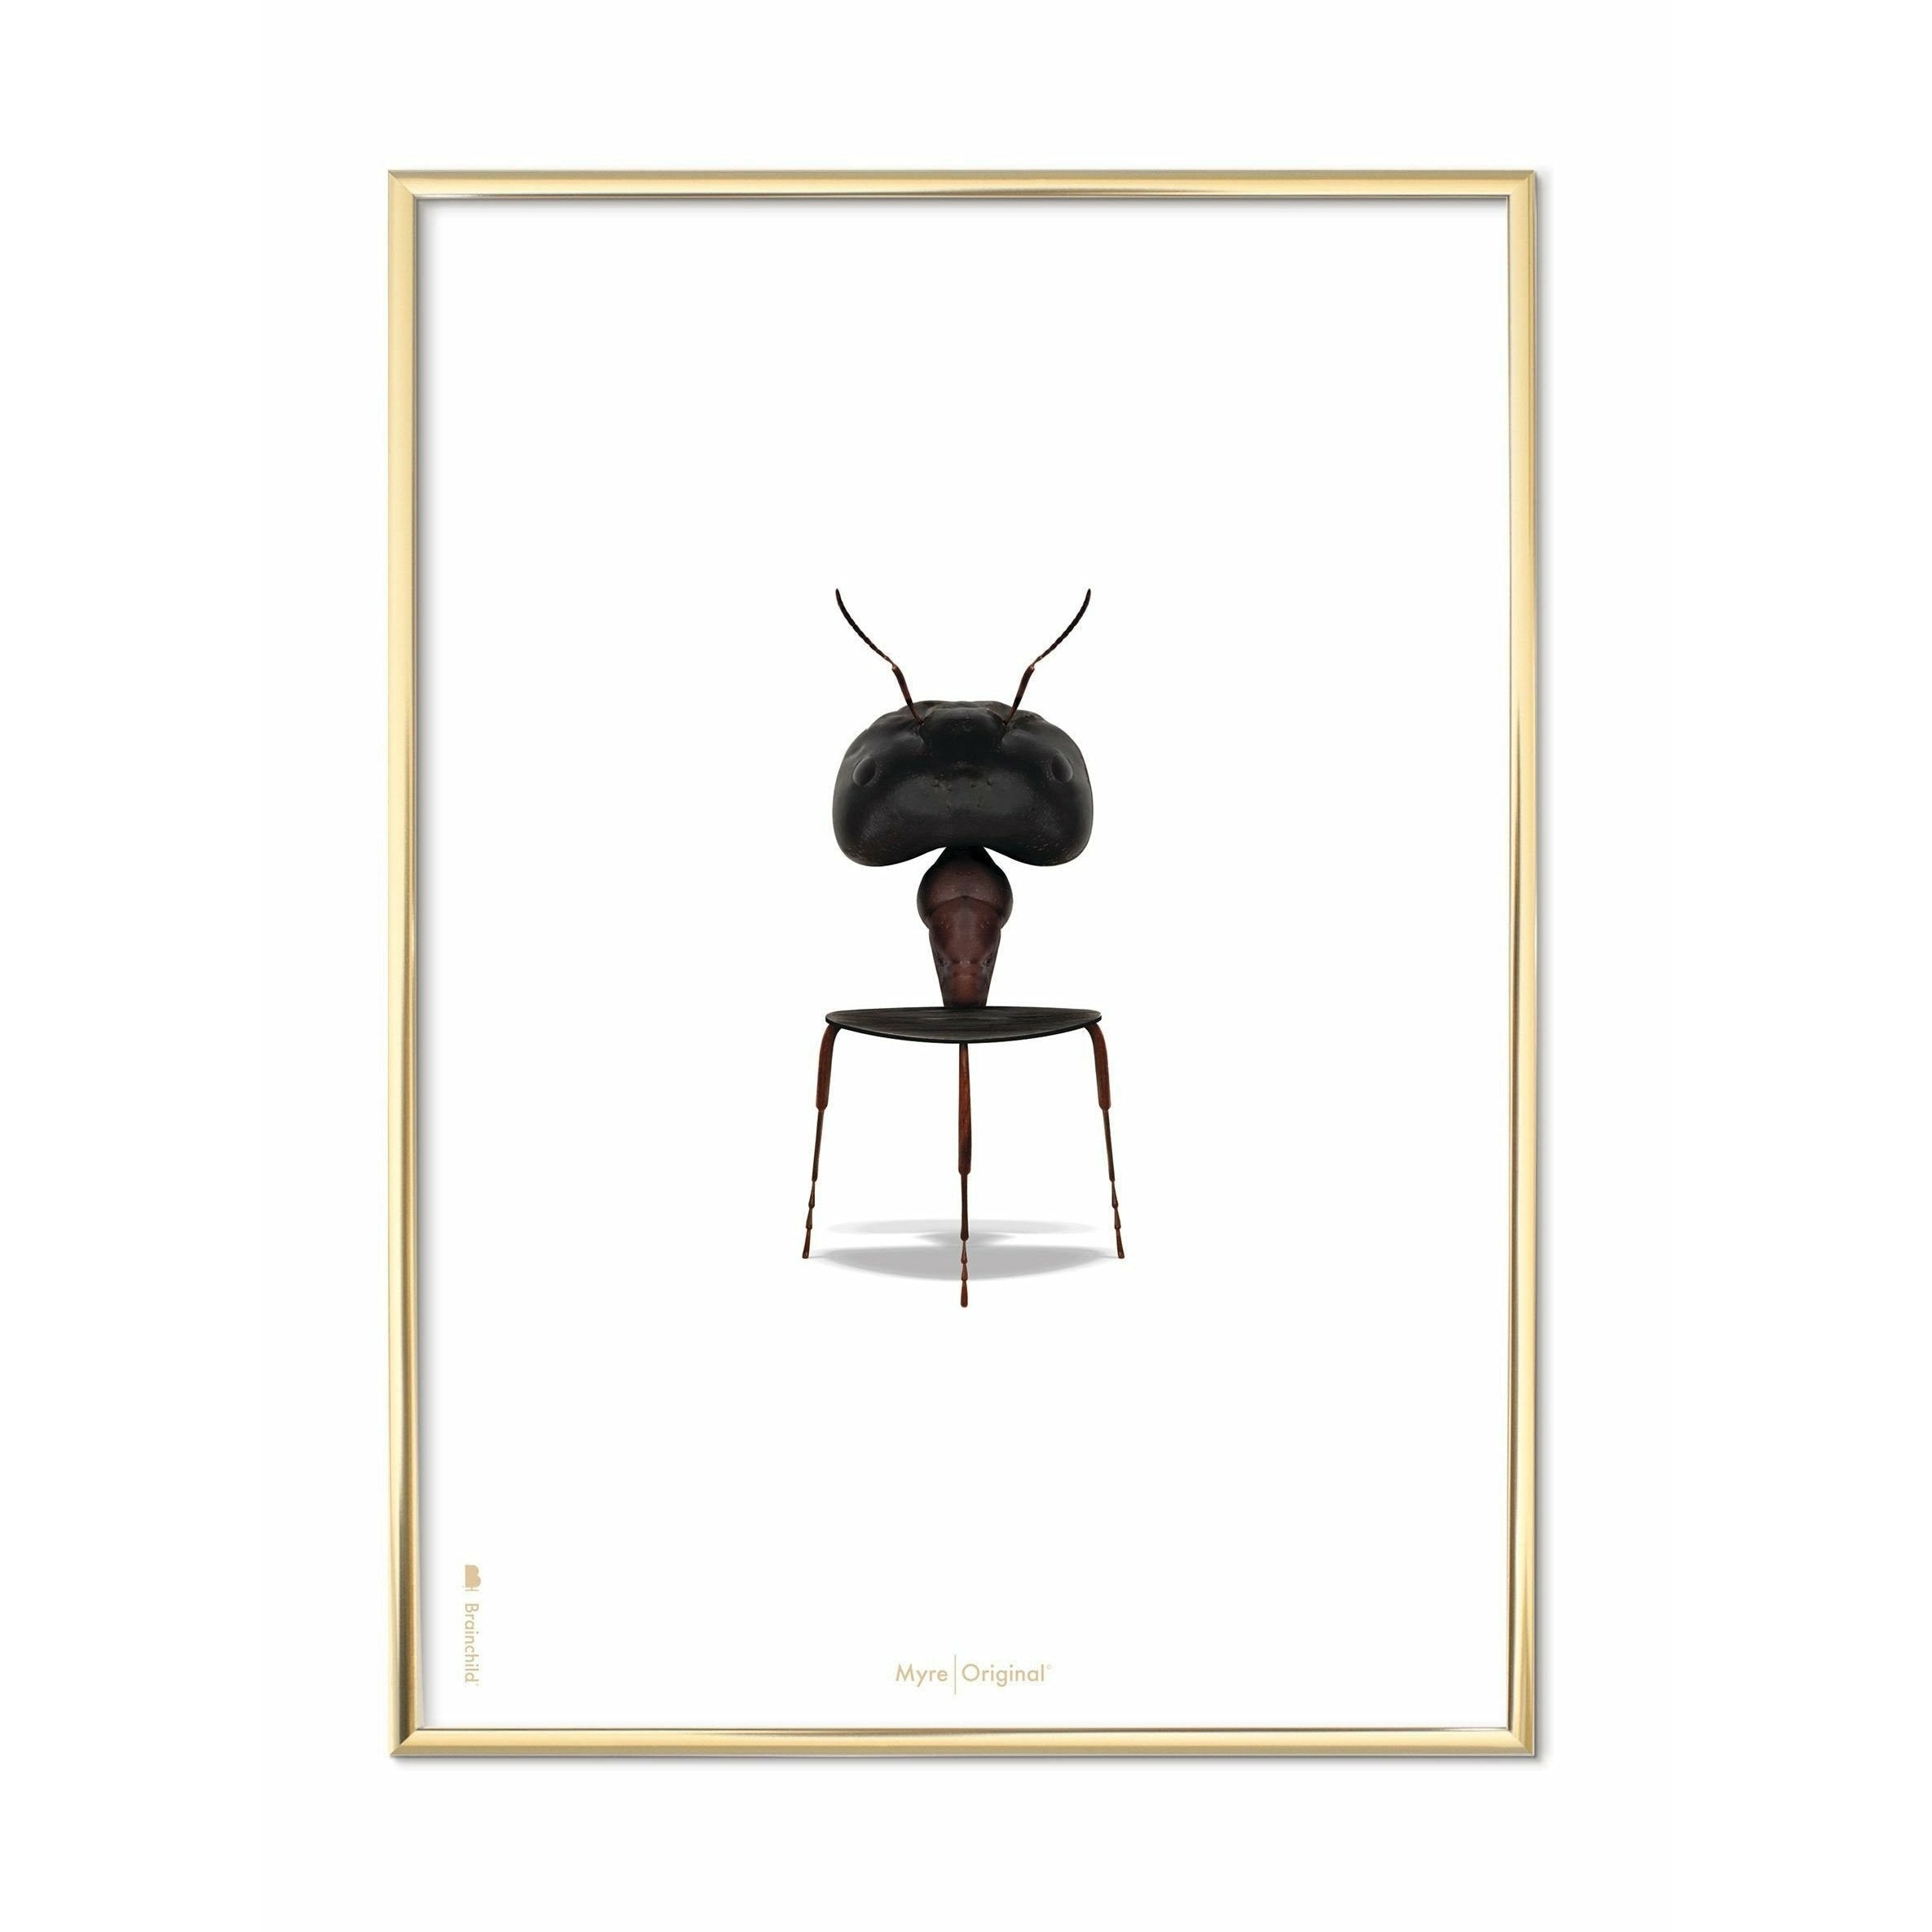 Póster clásico de hormigas de creación, marco de color de latón A5, fondo blanco